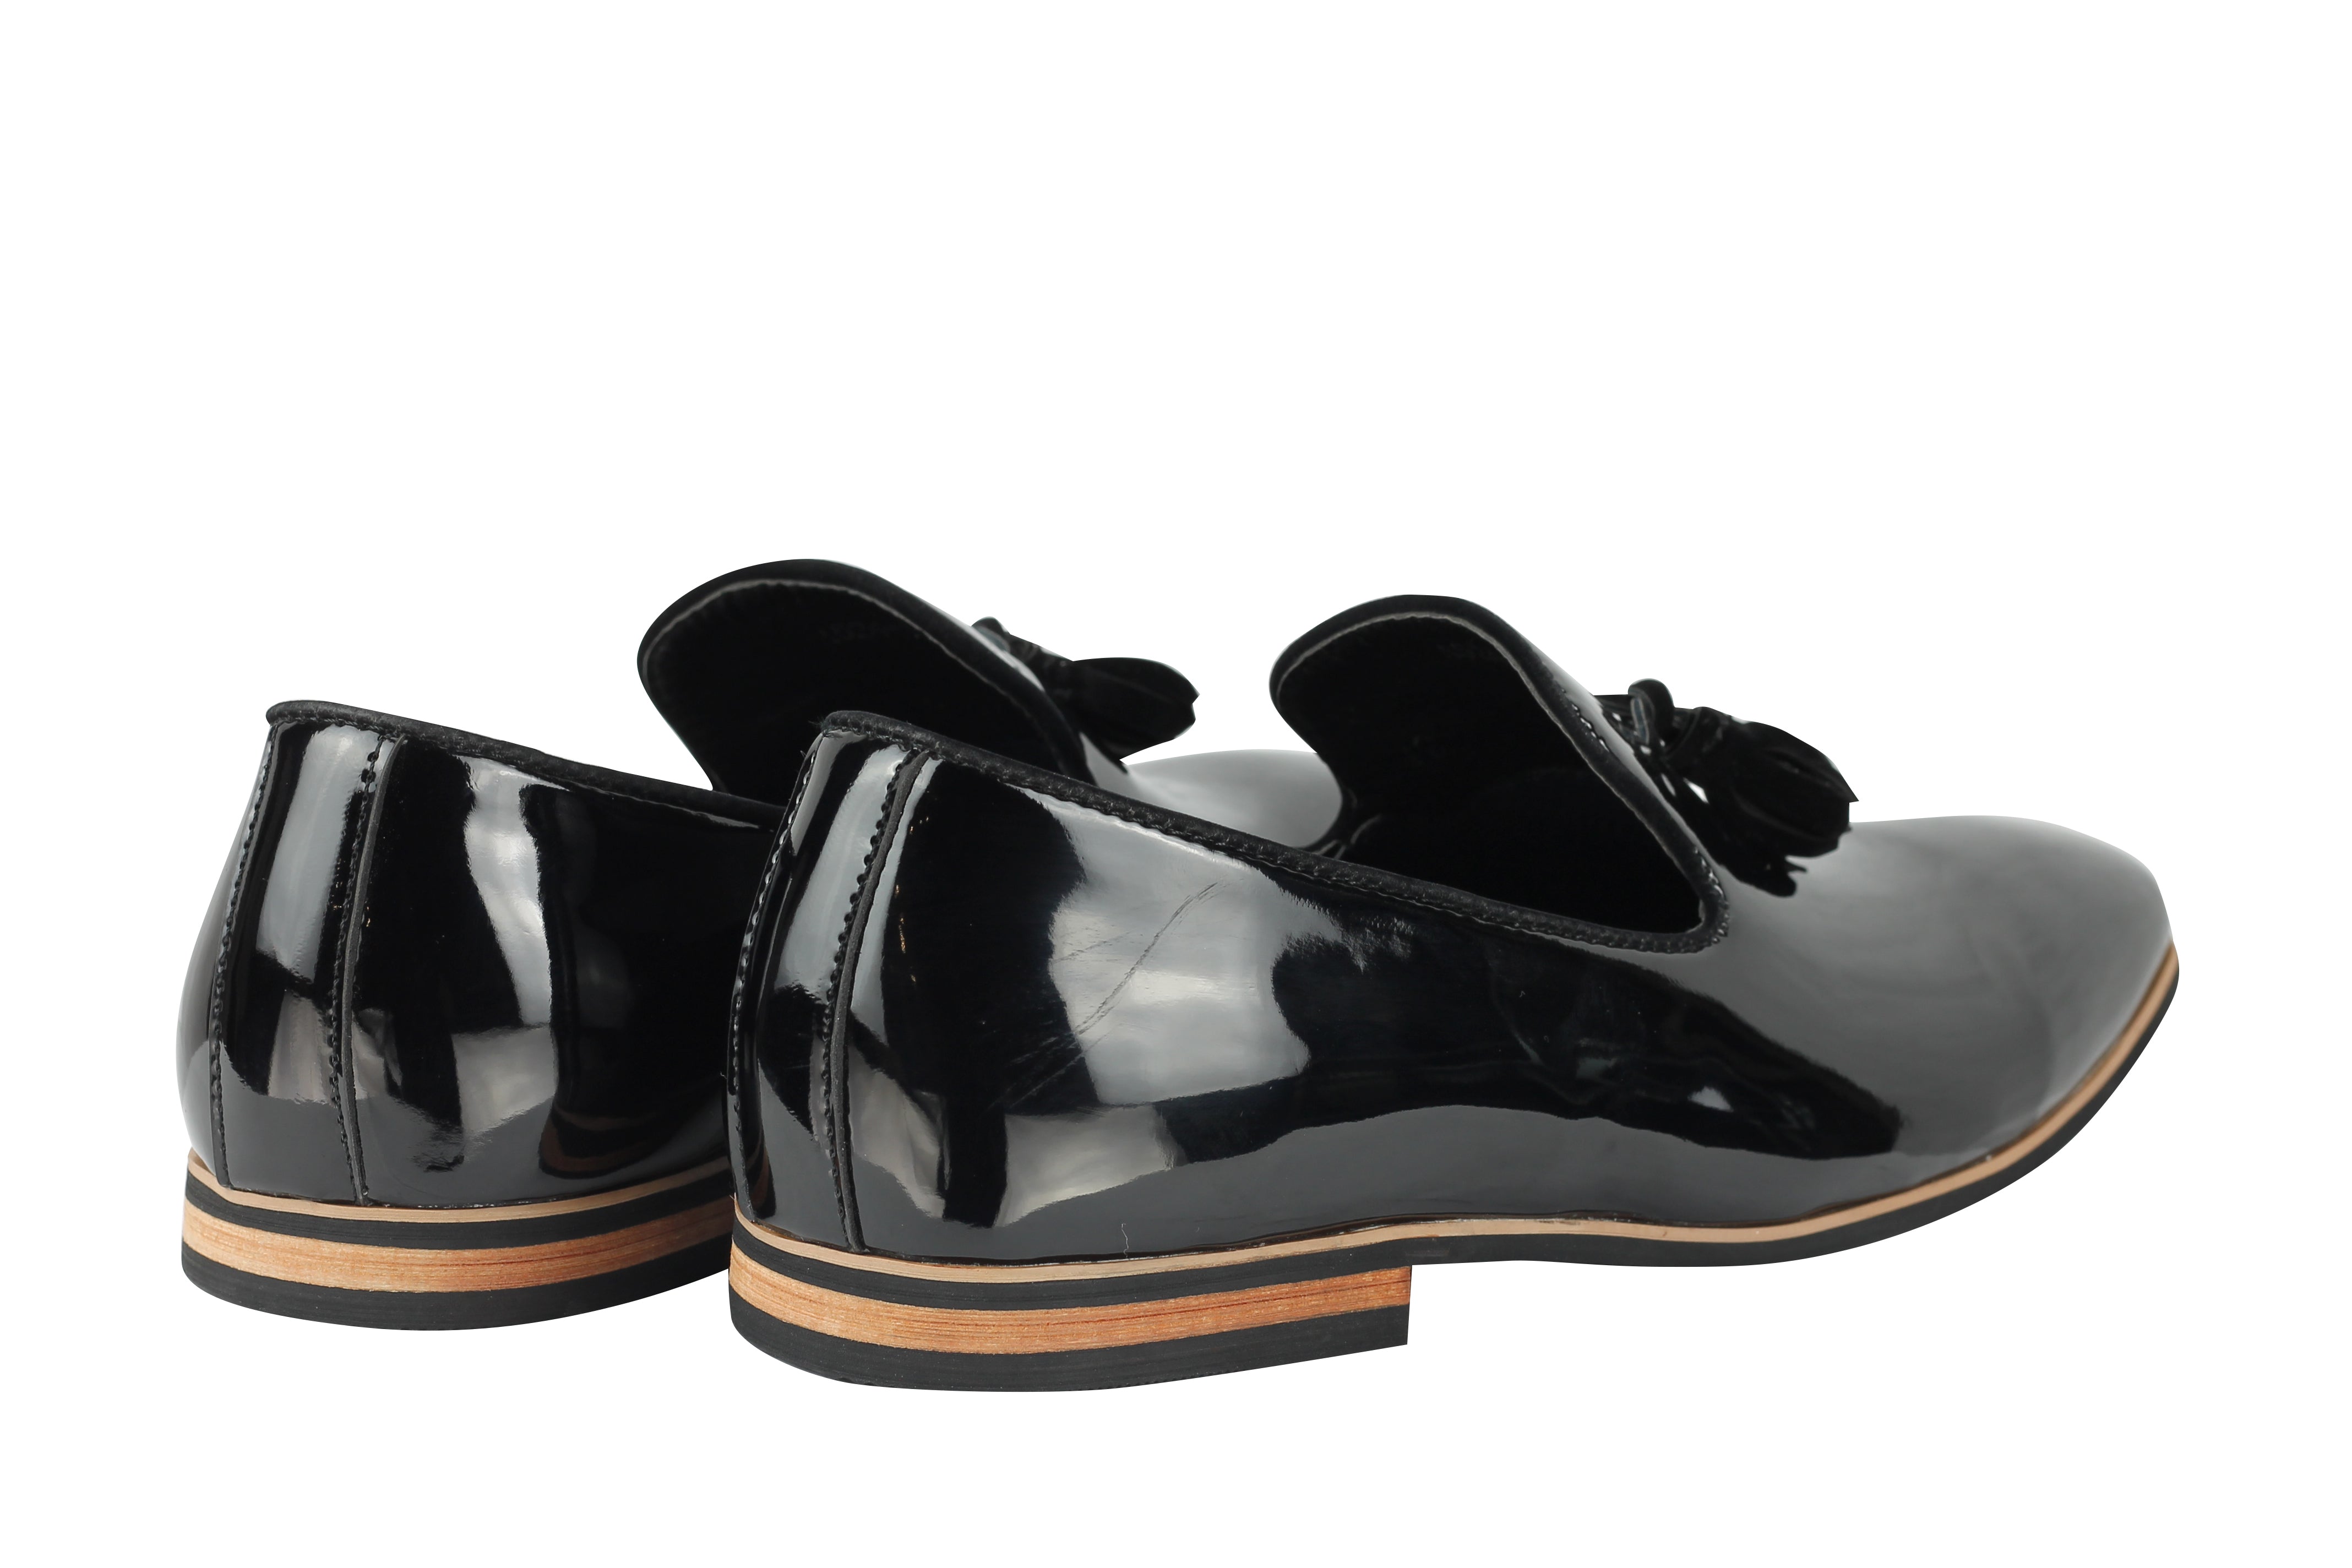 Shiny Patent Leather Slip On Black Shoes